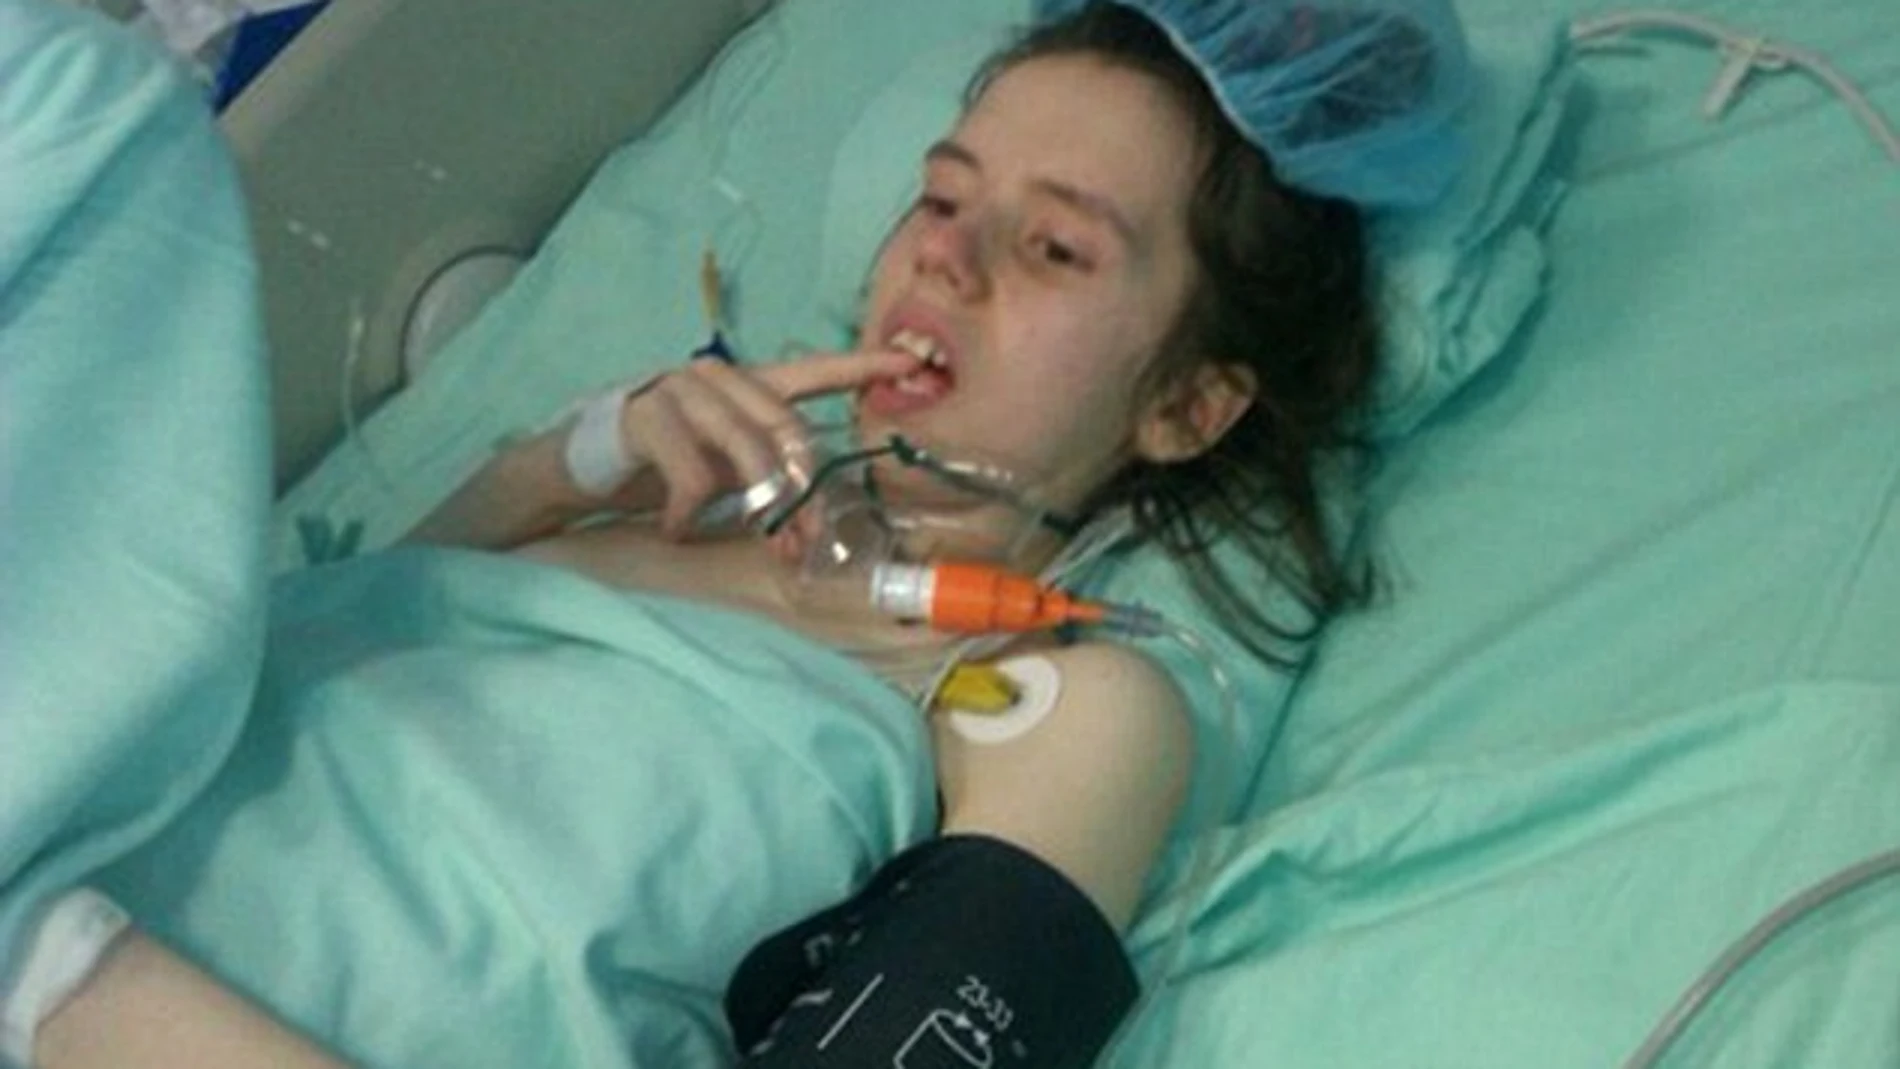 Danijela Kovacevic en la cama del hospital tras haber logrado salir del estado vegetativo